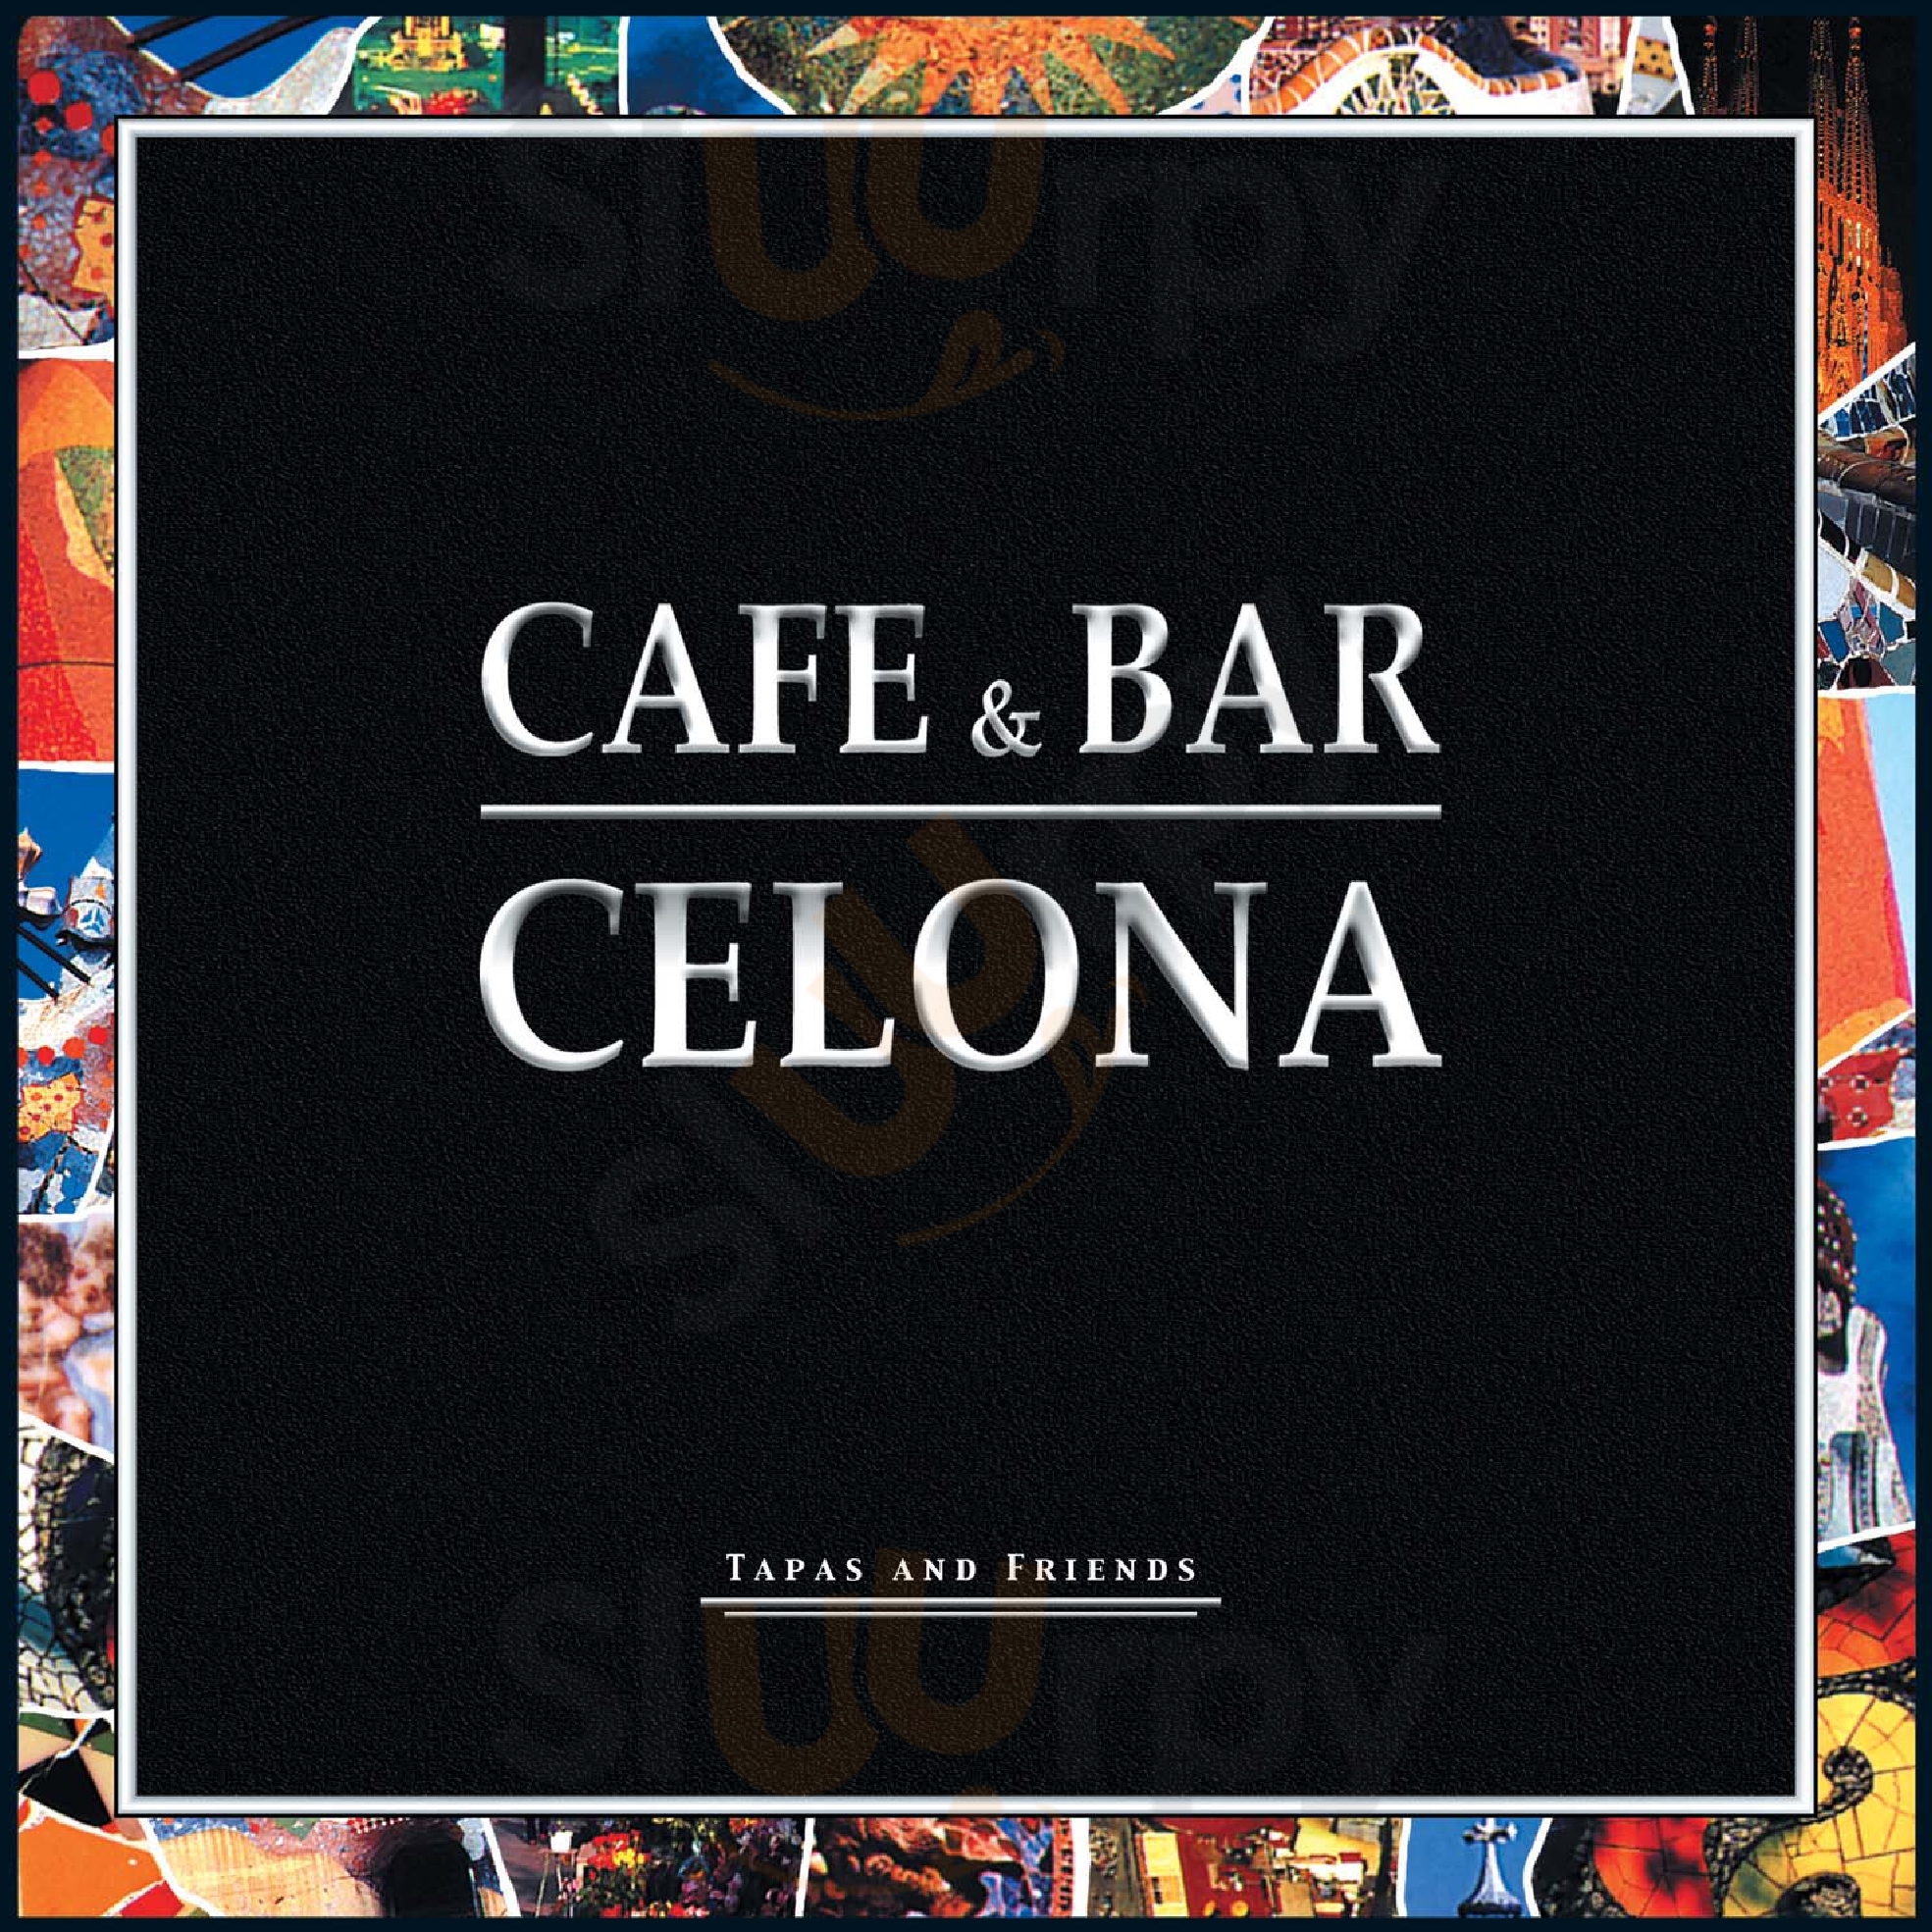 Cafe & Bar Celona Paderborn Paderborn Menu - 1